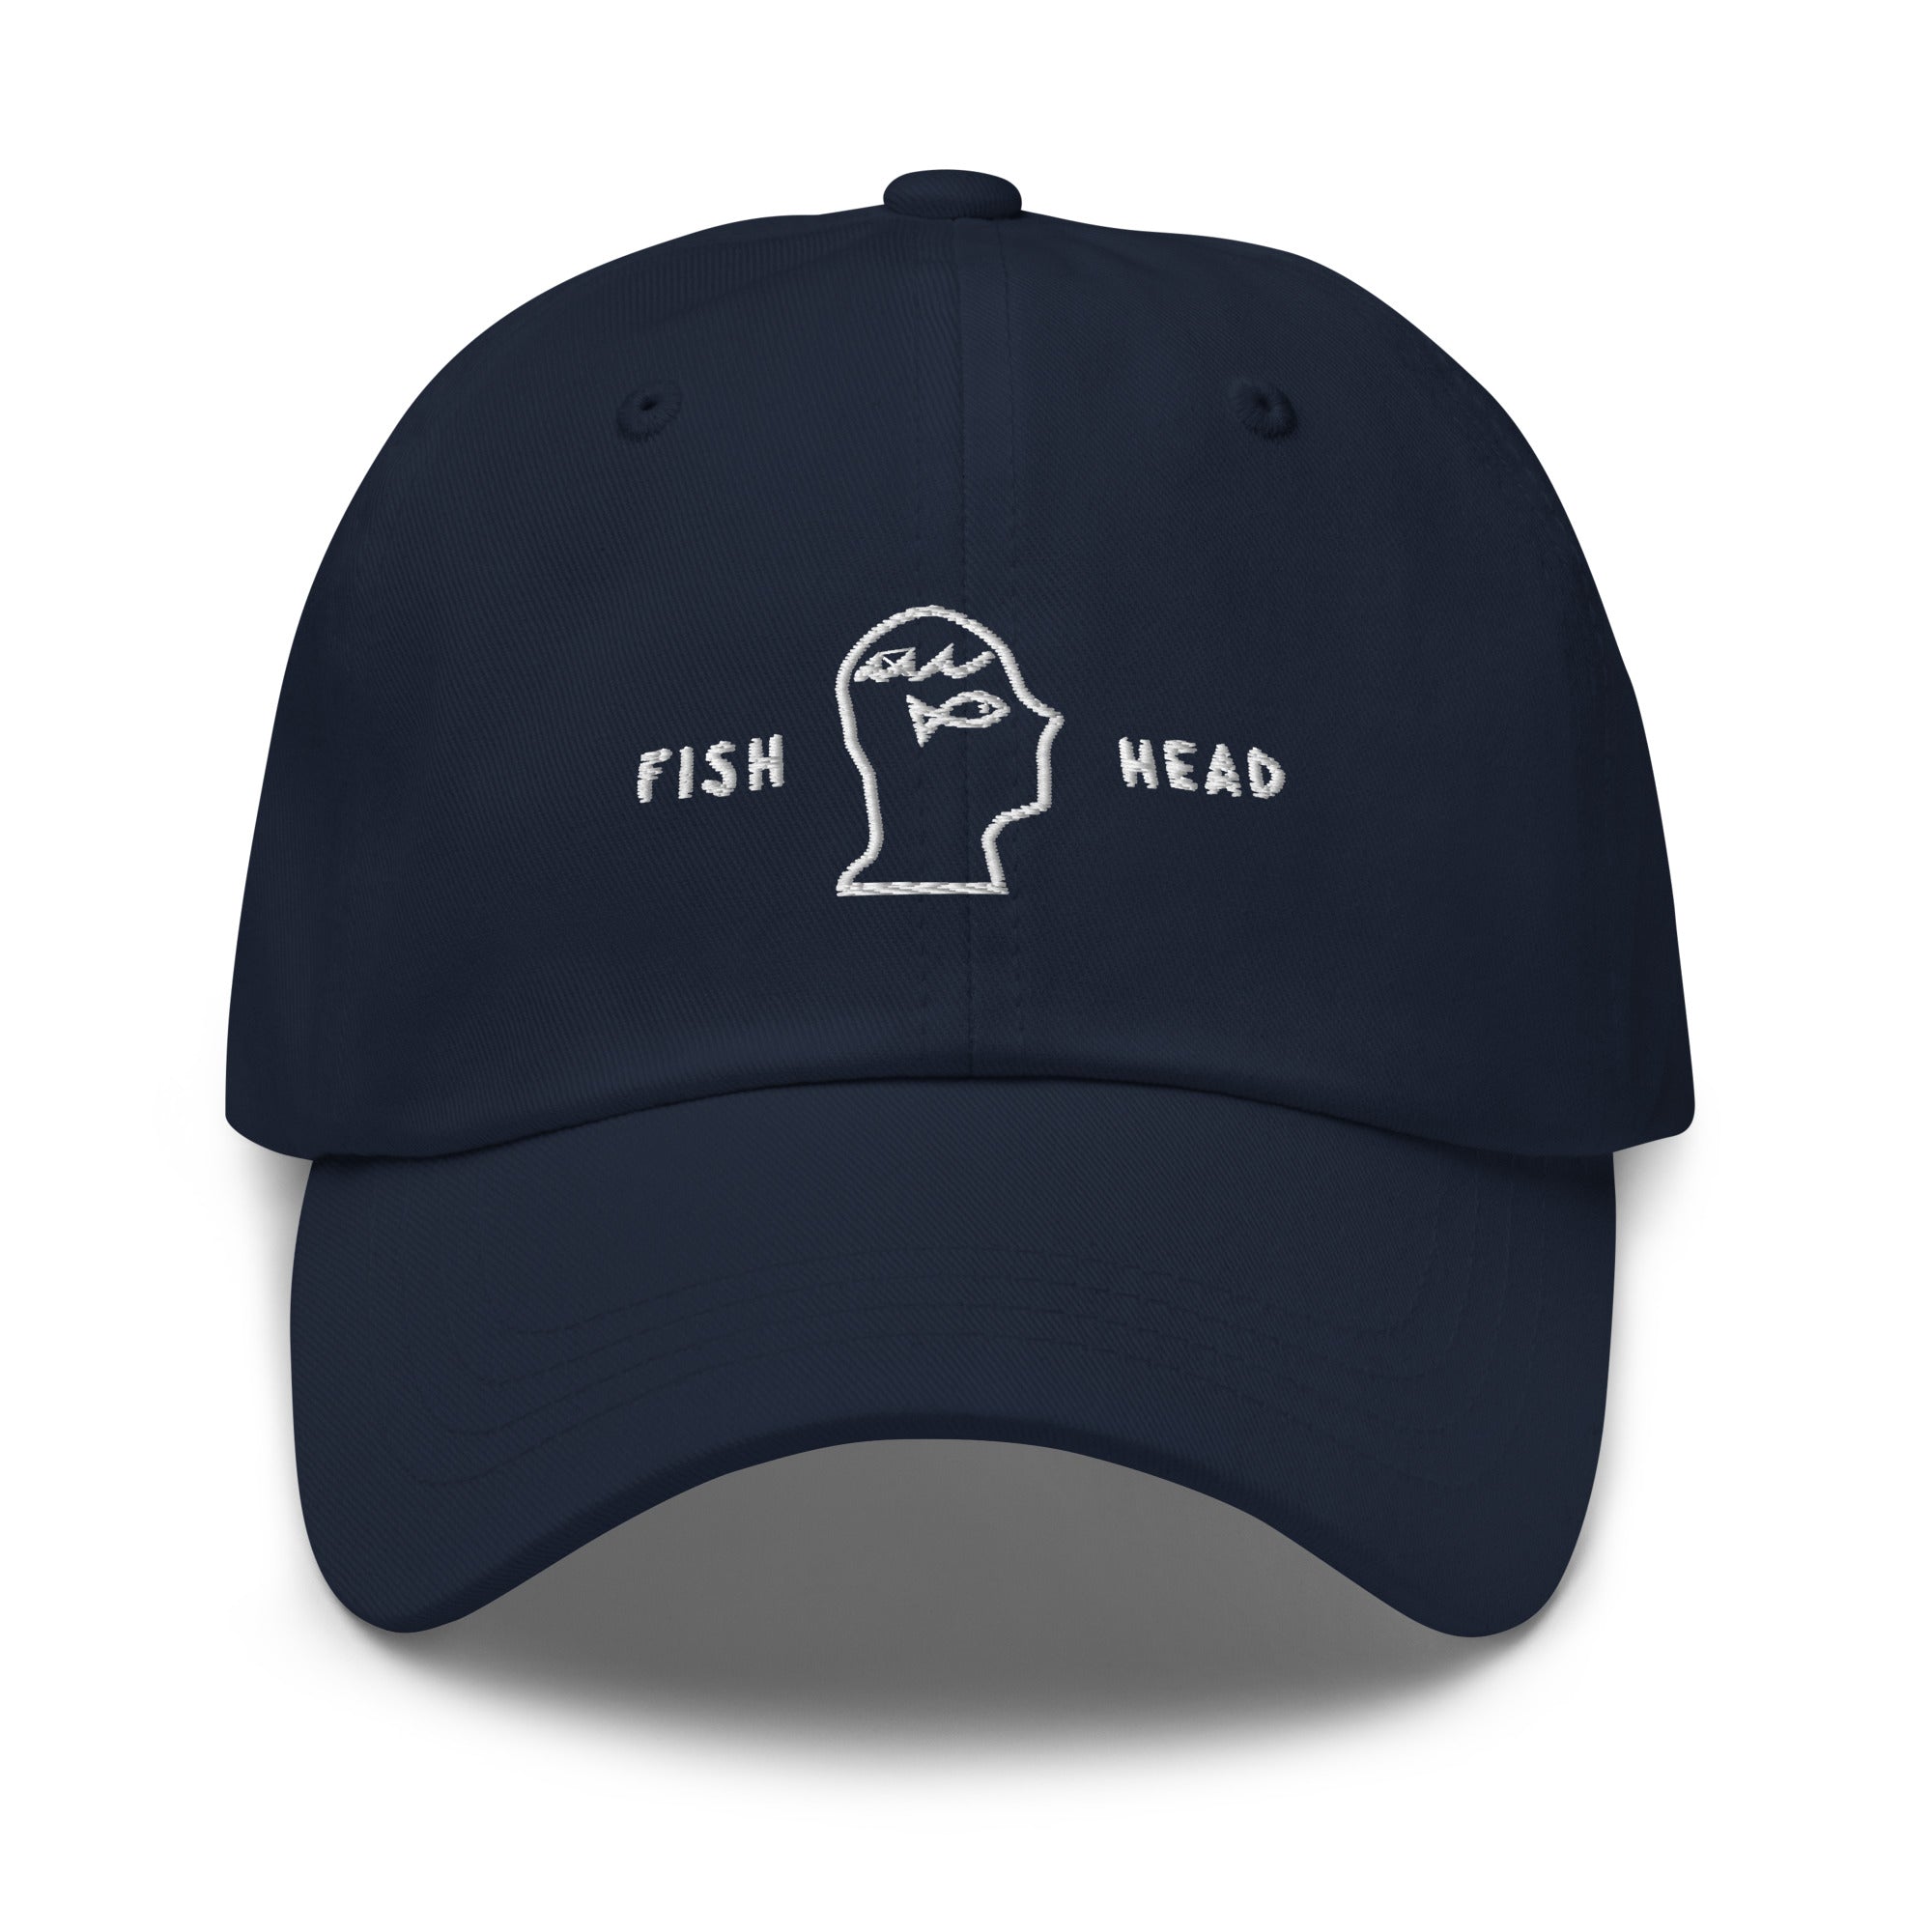 Fish head Dad hat - Oddhook